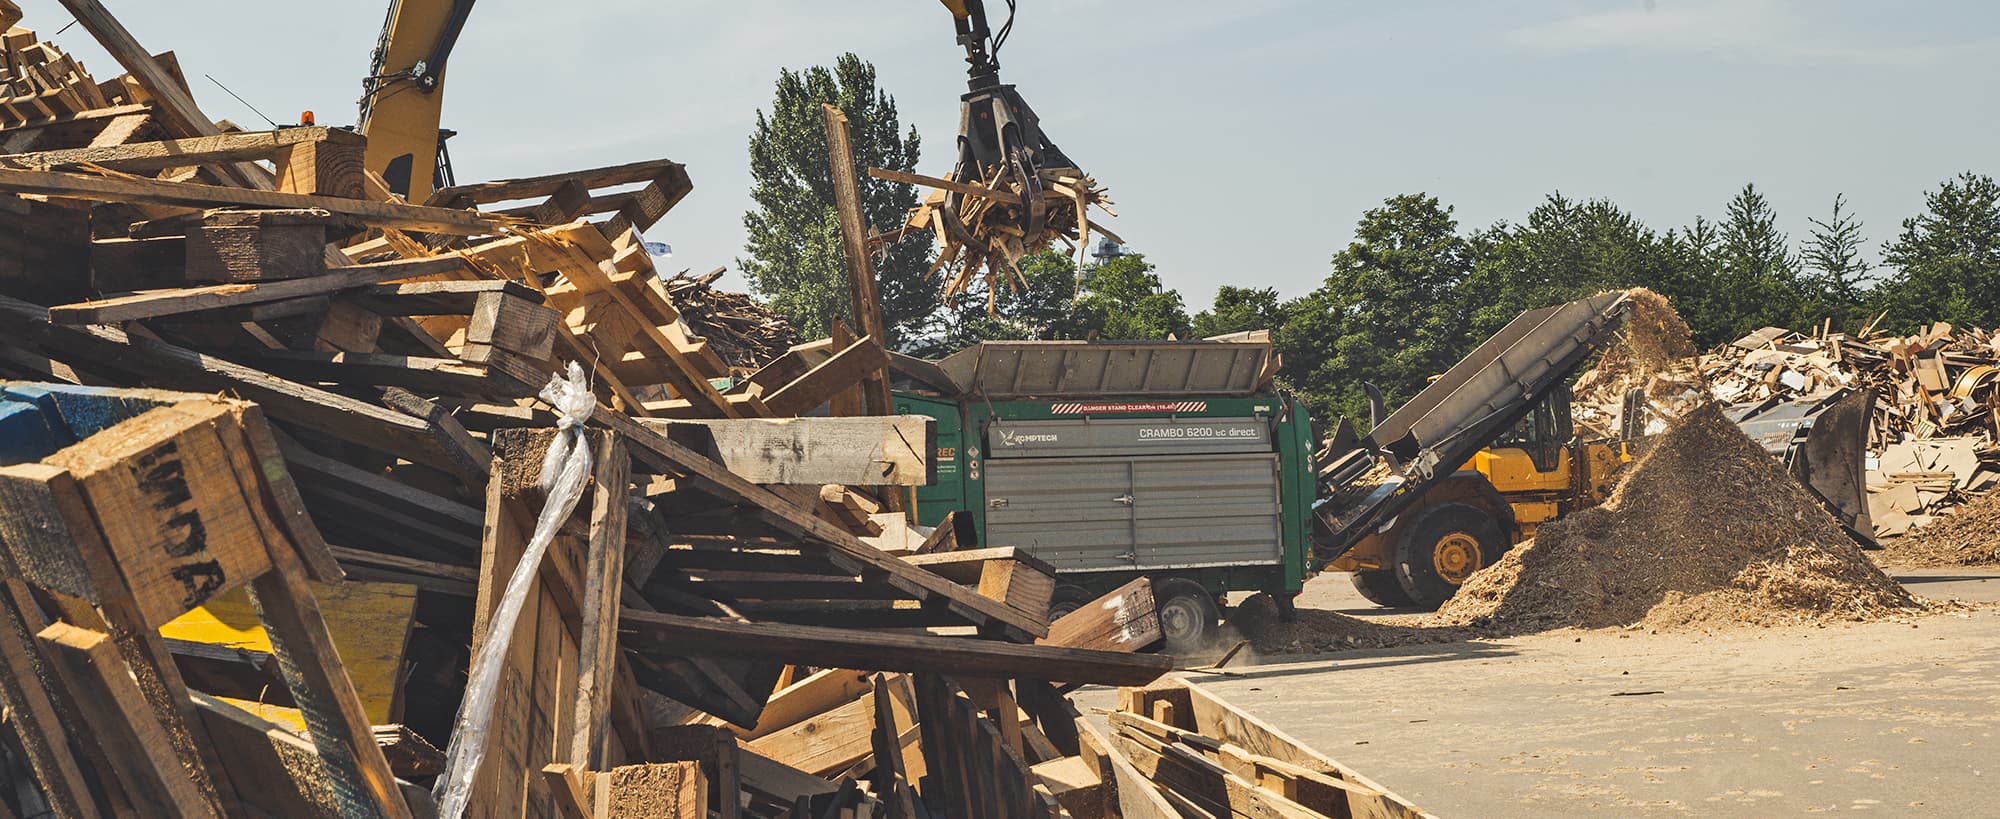 Das Firmenprofil der Firma HolzREC umfasst Holzrecycling von Altholz